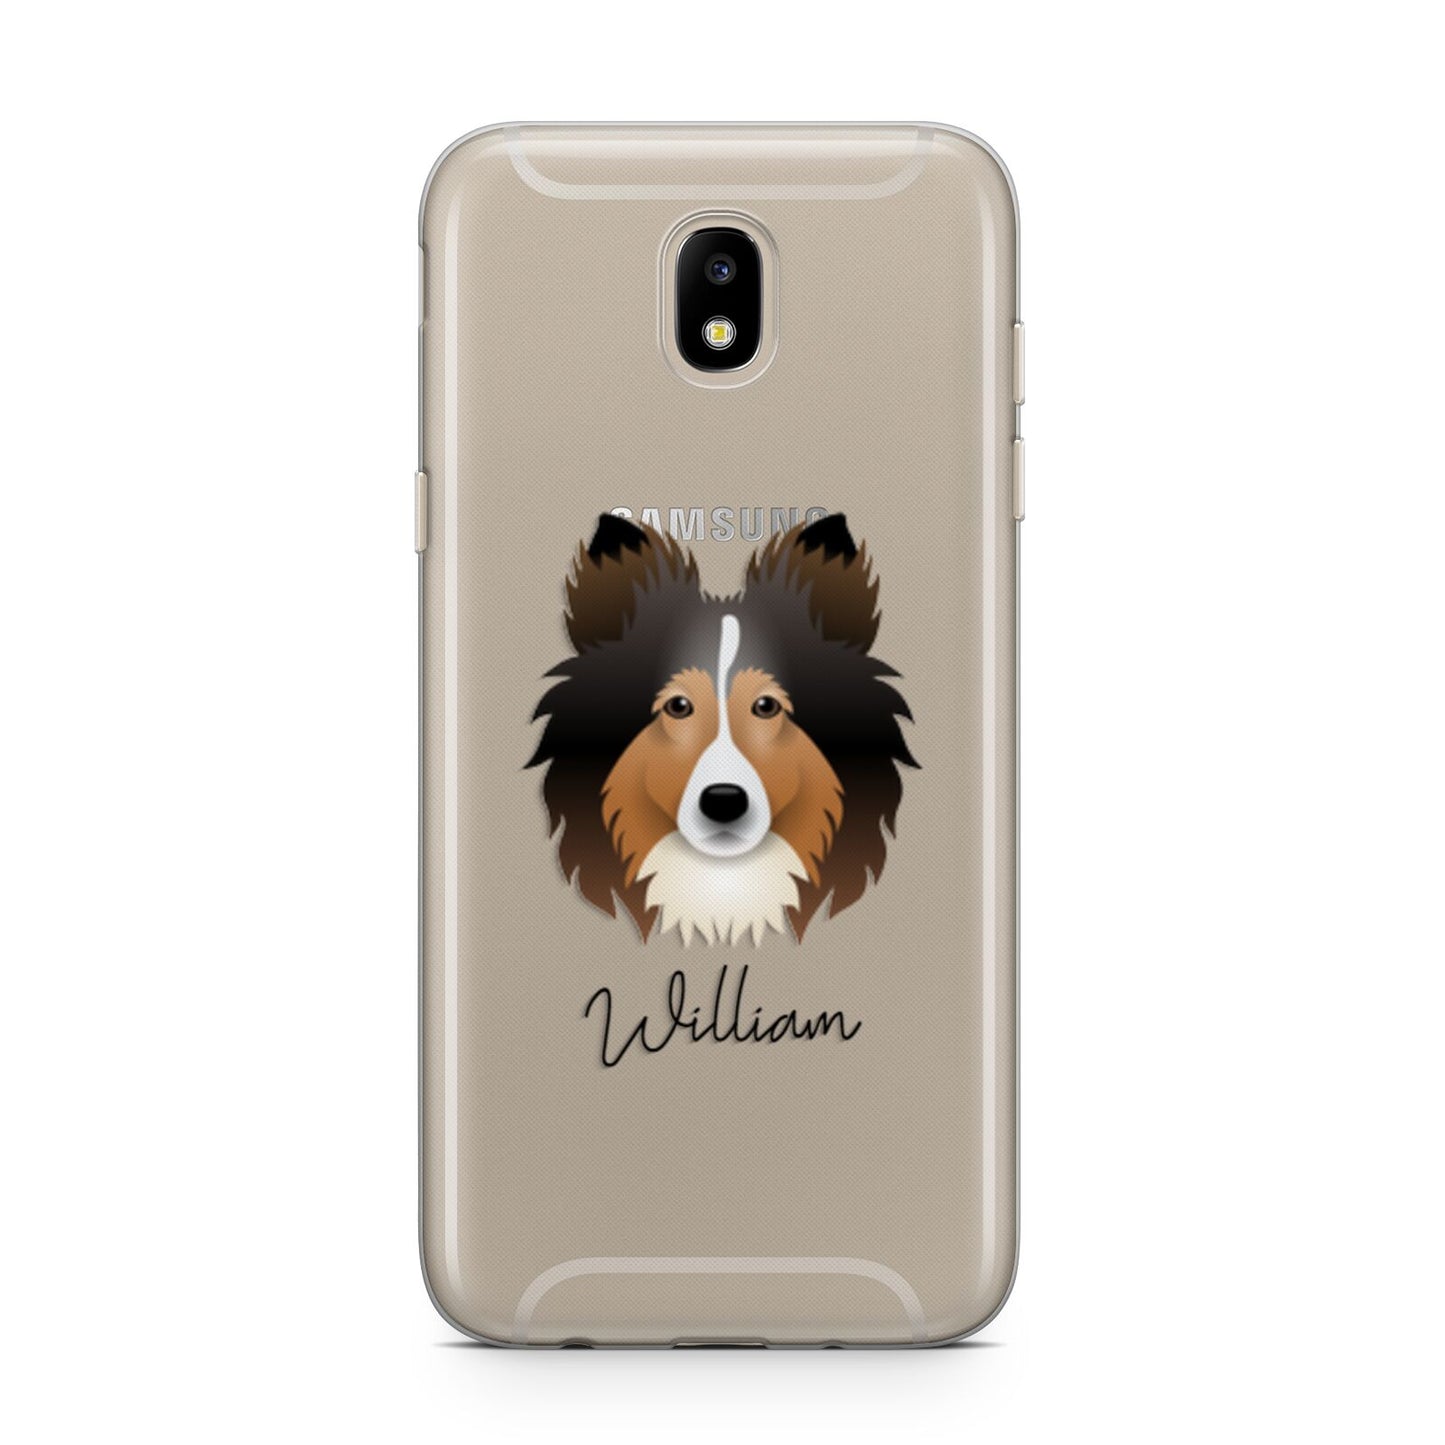 Shetland Sheepdog Personalised Samsung J5 2017 Case